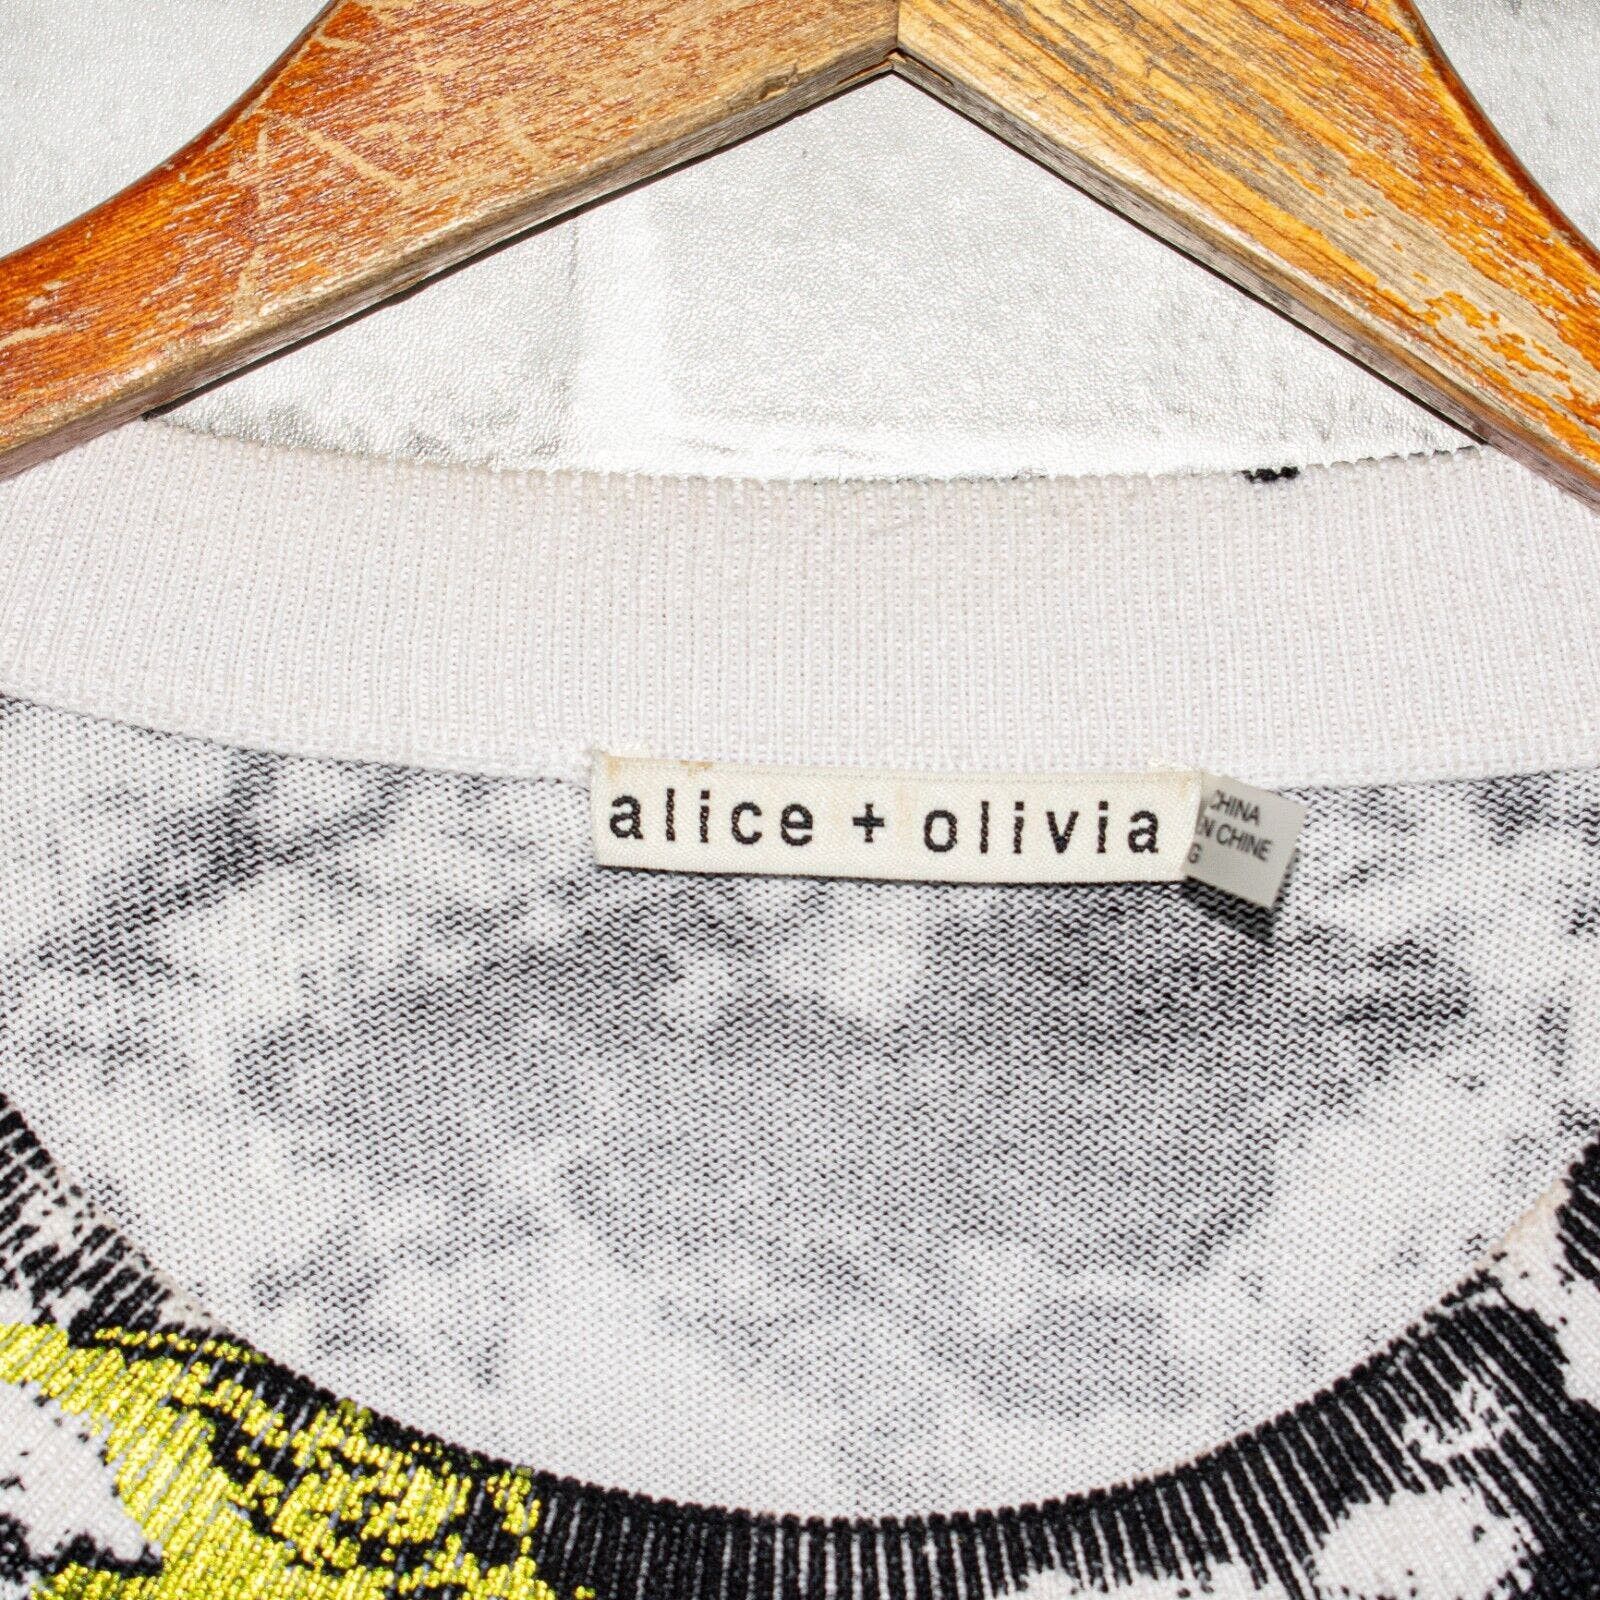 Alice + Olivia Alice + Olivia Quintin Printed Crew Sweater Black White Size XL / US 12-14 / IT 48-50 - 4 Thumbnail